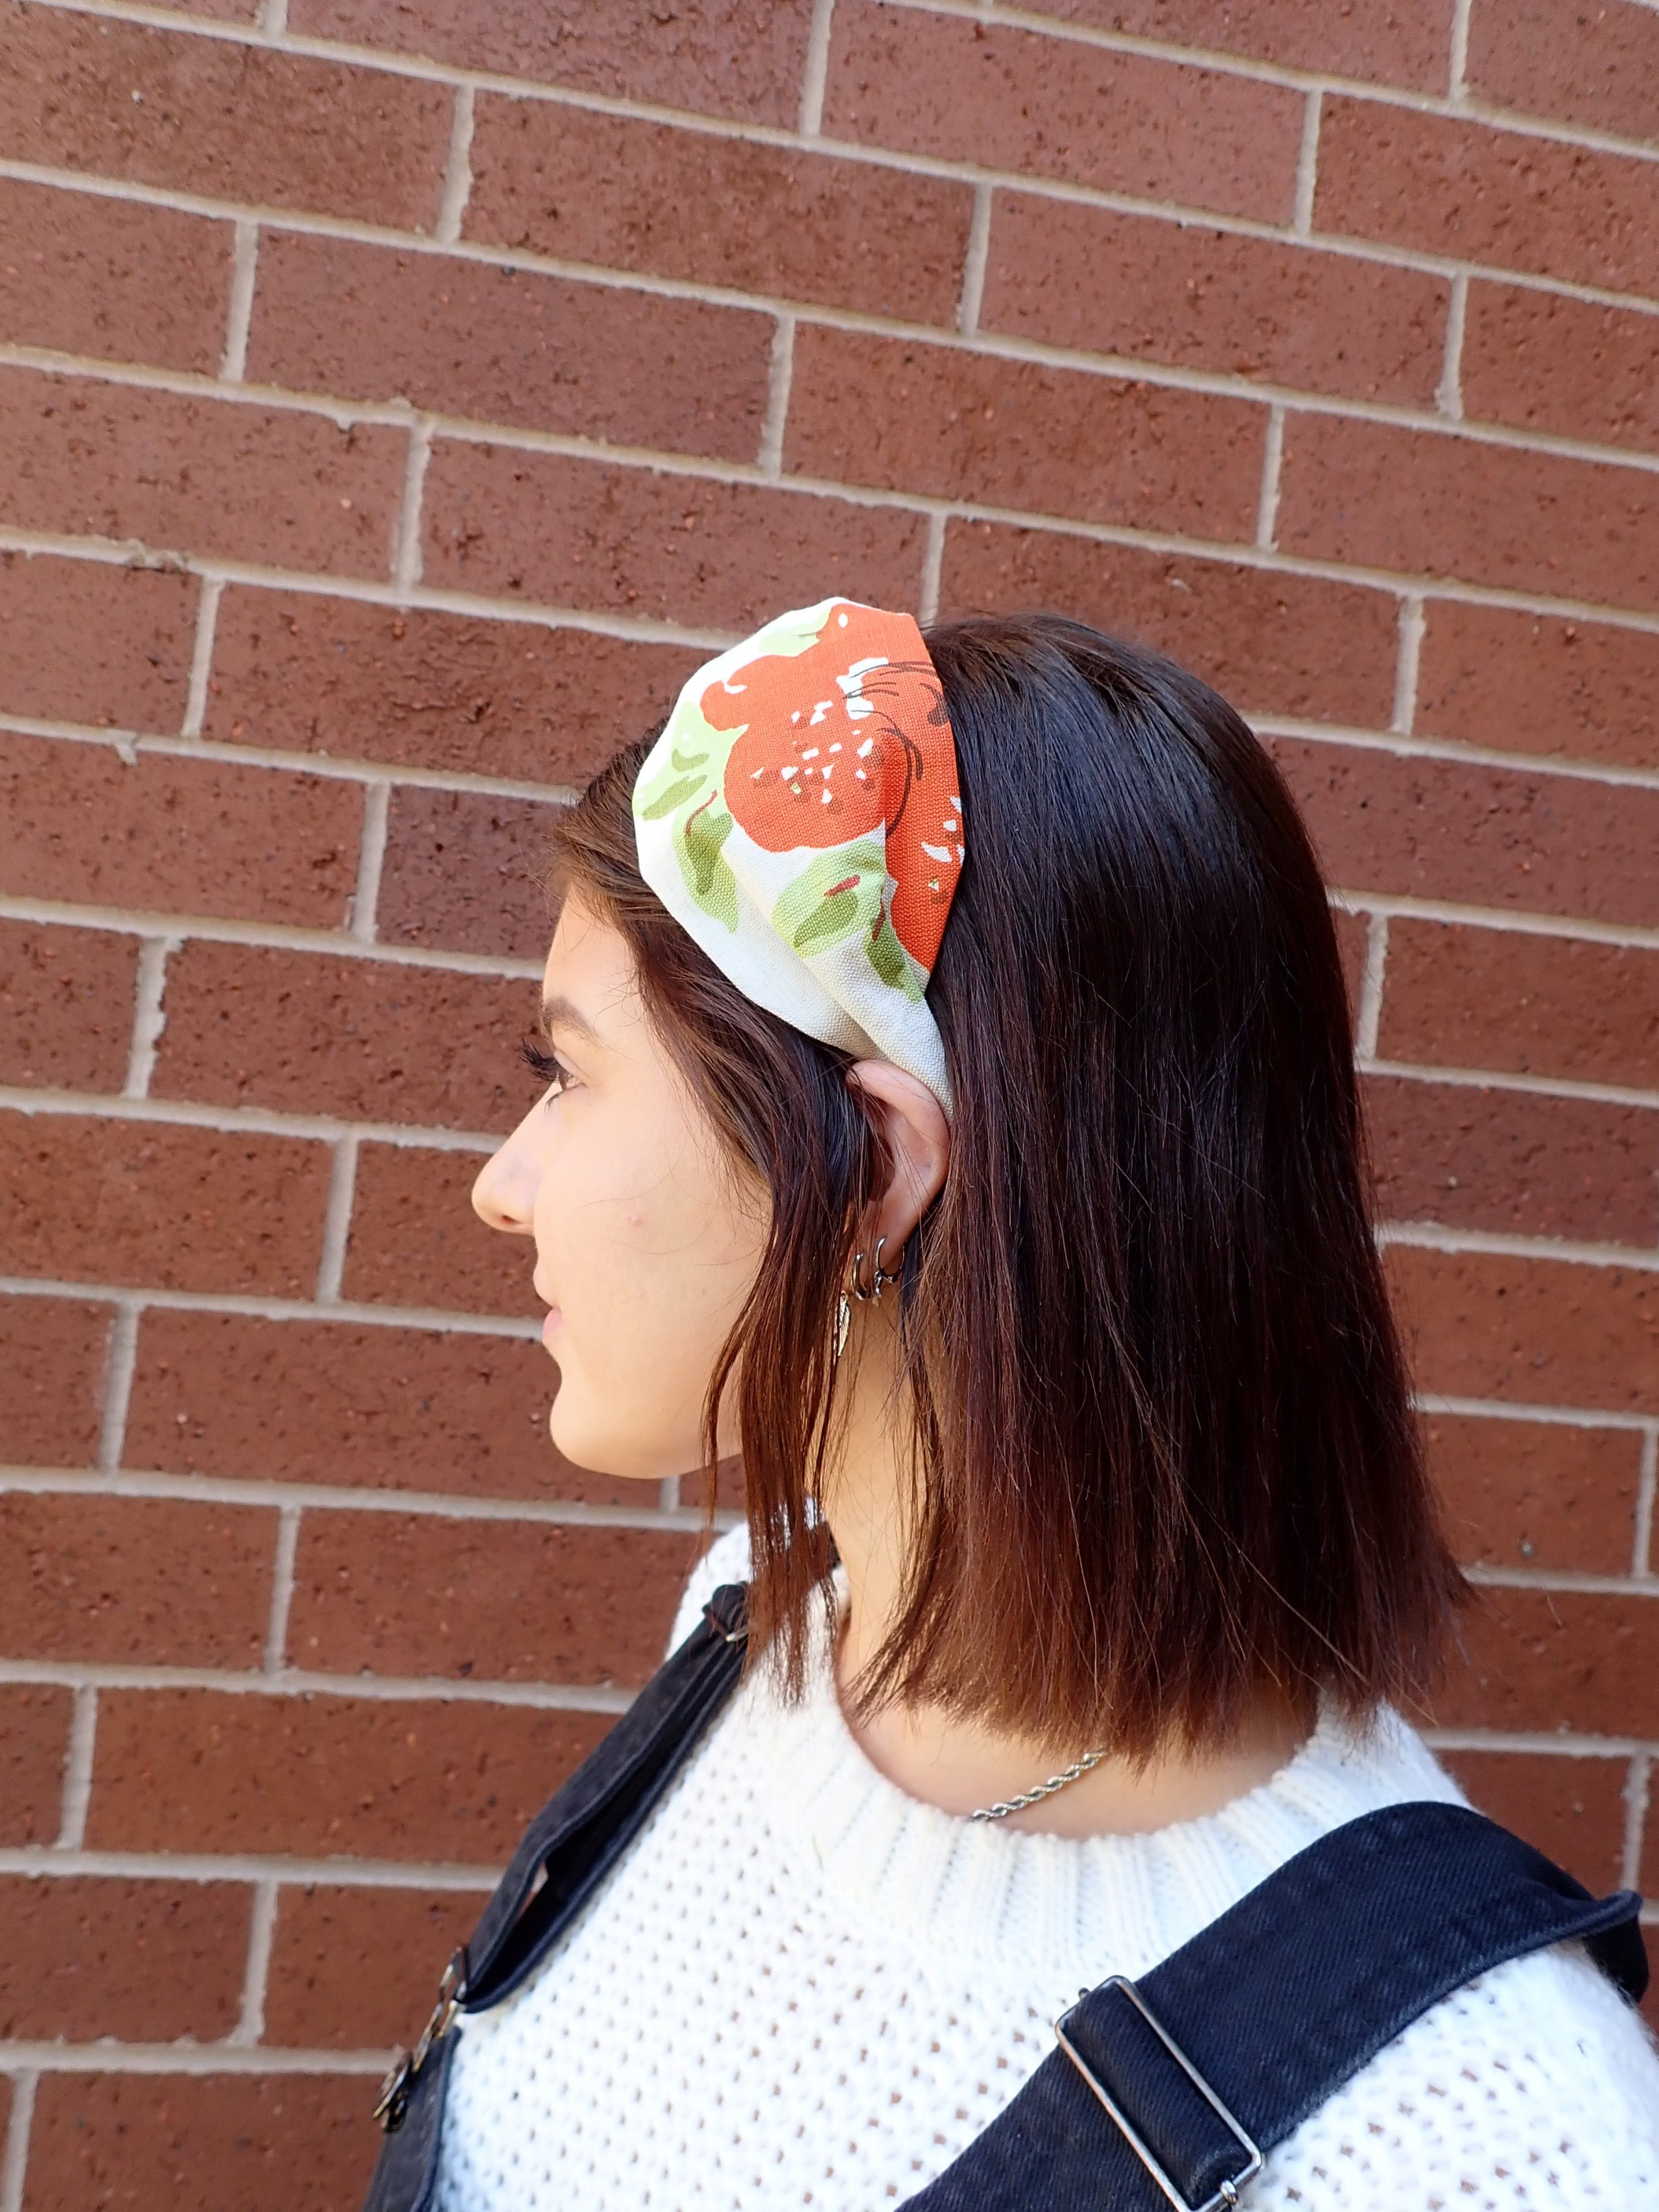 Ladies Multicolor Chic Floral Turban Headband. Repurposed Fabric Headband Hat Accessory.